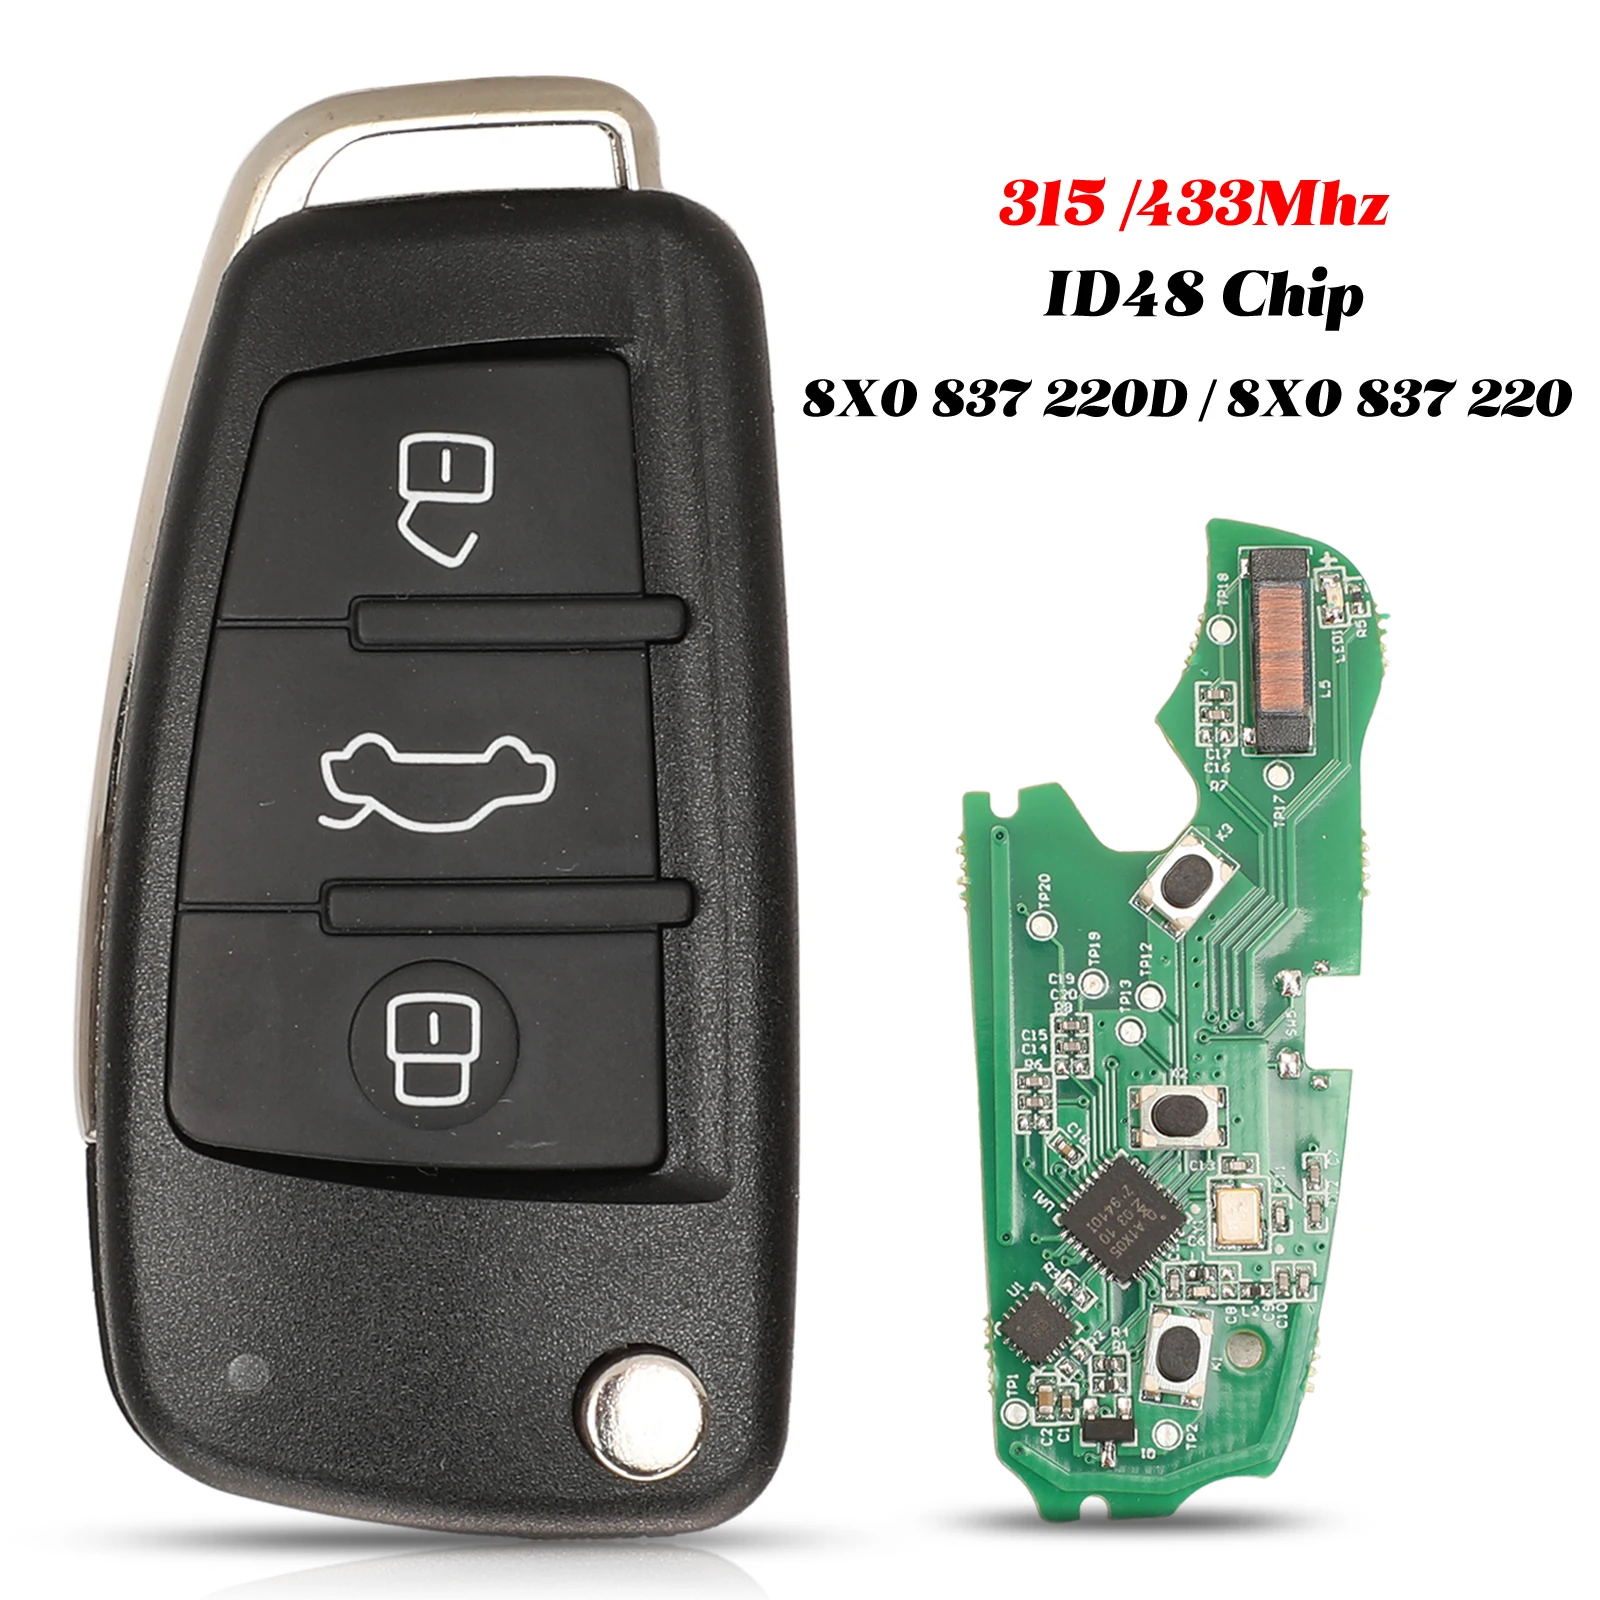 Jingyuqin 3 Mygtukai Audi Q3 Fob Keyless Go Smart Nuotolinio Valdymo Automobilio Raktas PAKLAUSTI, 315 /433Mhz ID48 Chip 8X0 837 220D / 8X0 837 220 0